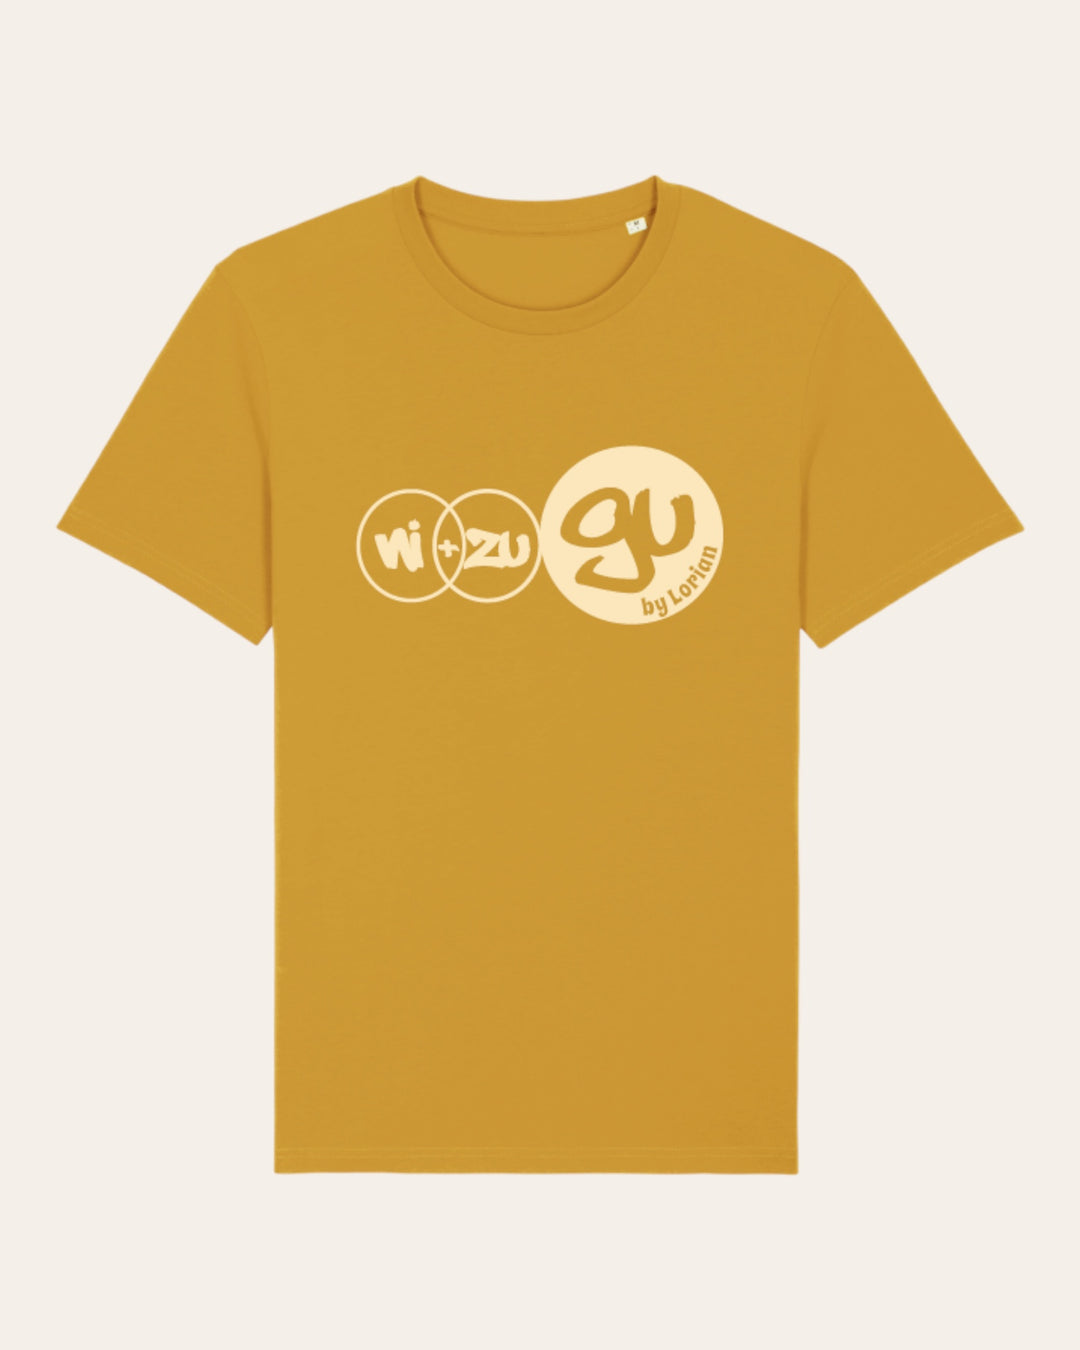 NI + ZU GU T-shirt